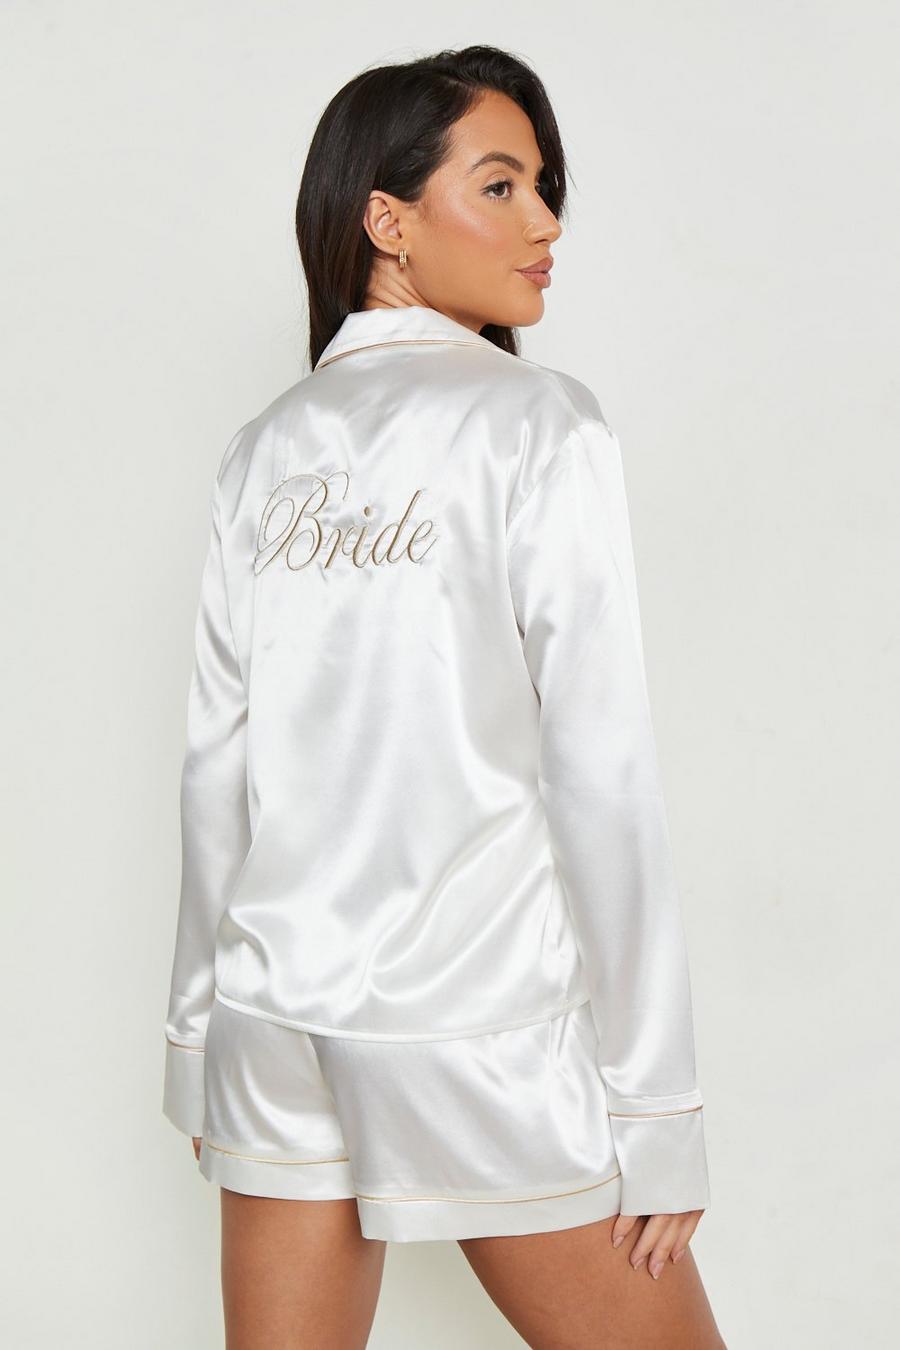 White vit Bride Embroidery Pj Short Set 